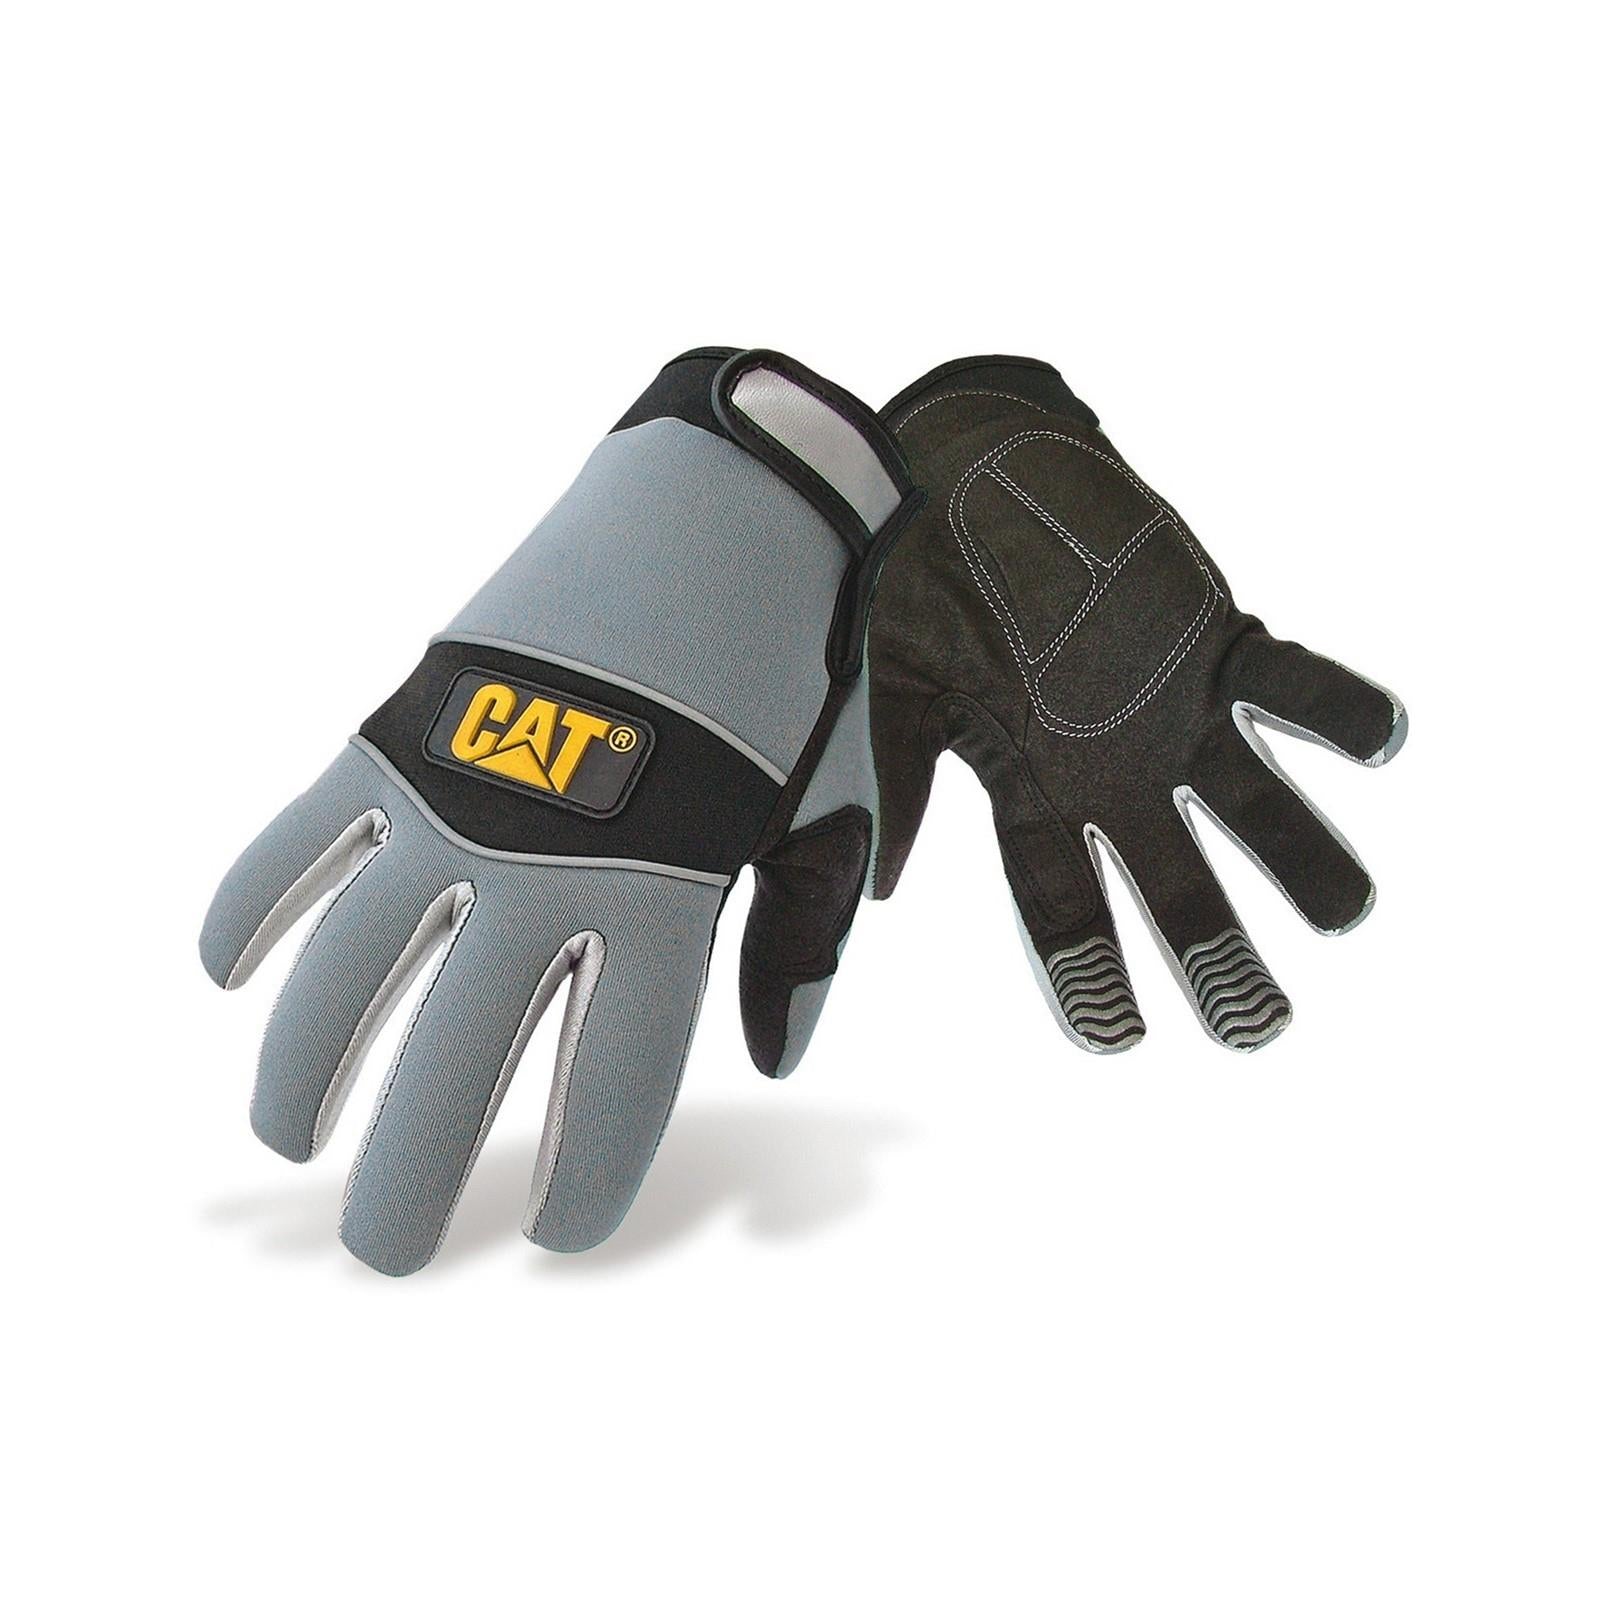 Caterpillar CAT synthetic leather palm neoprene back work glove #12213